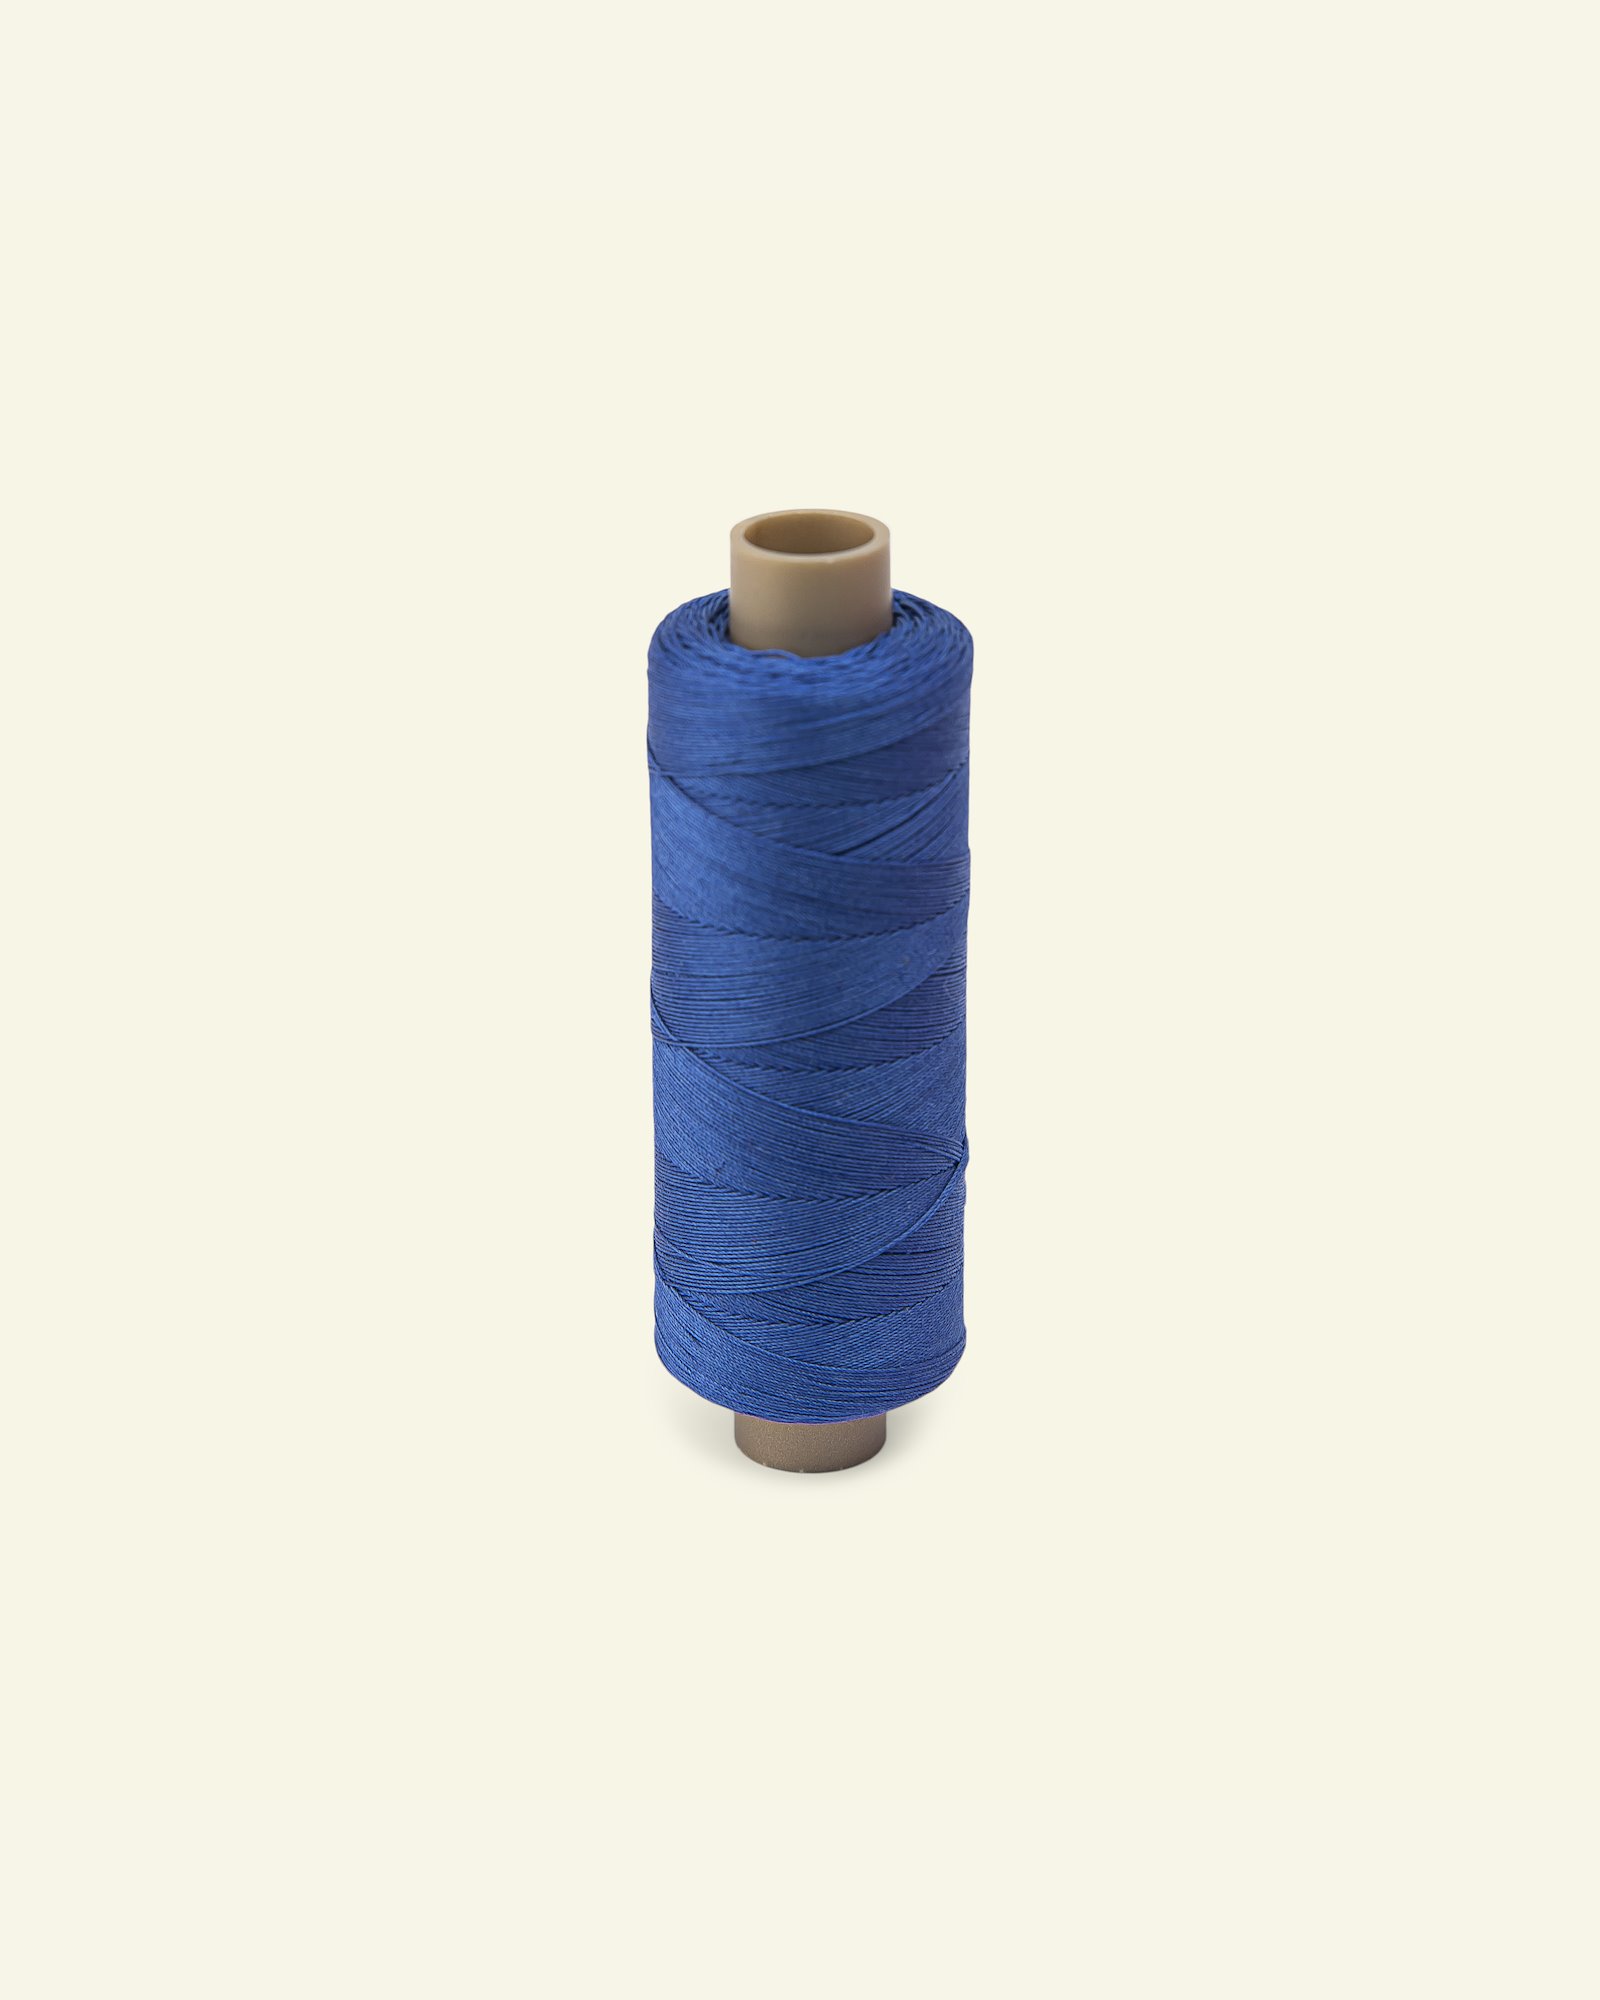 Quilting thread blue 300m 19021_pack